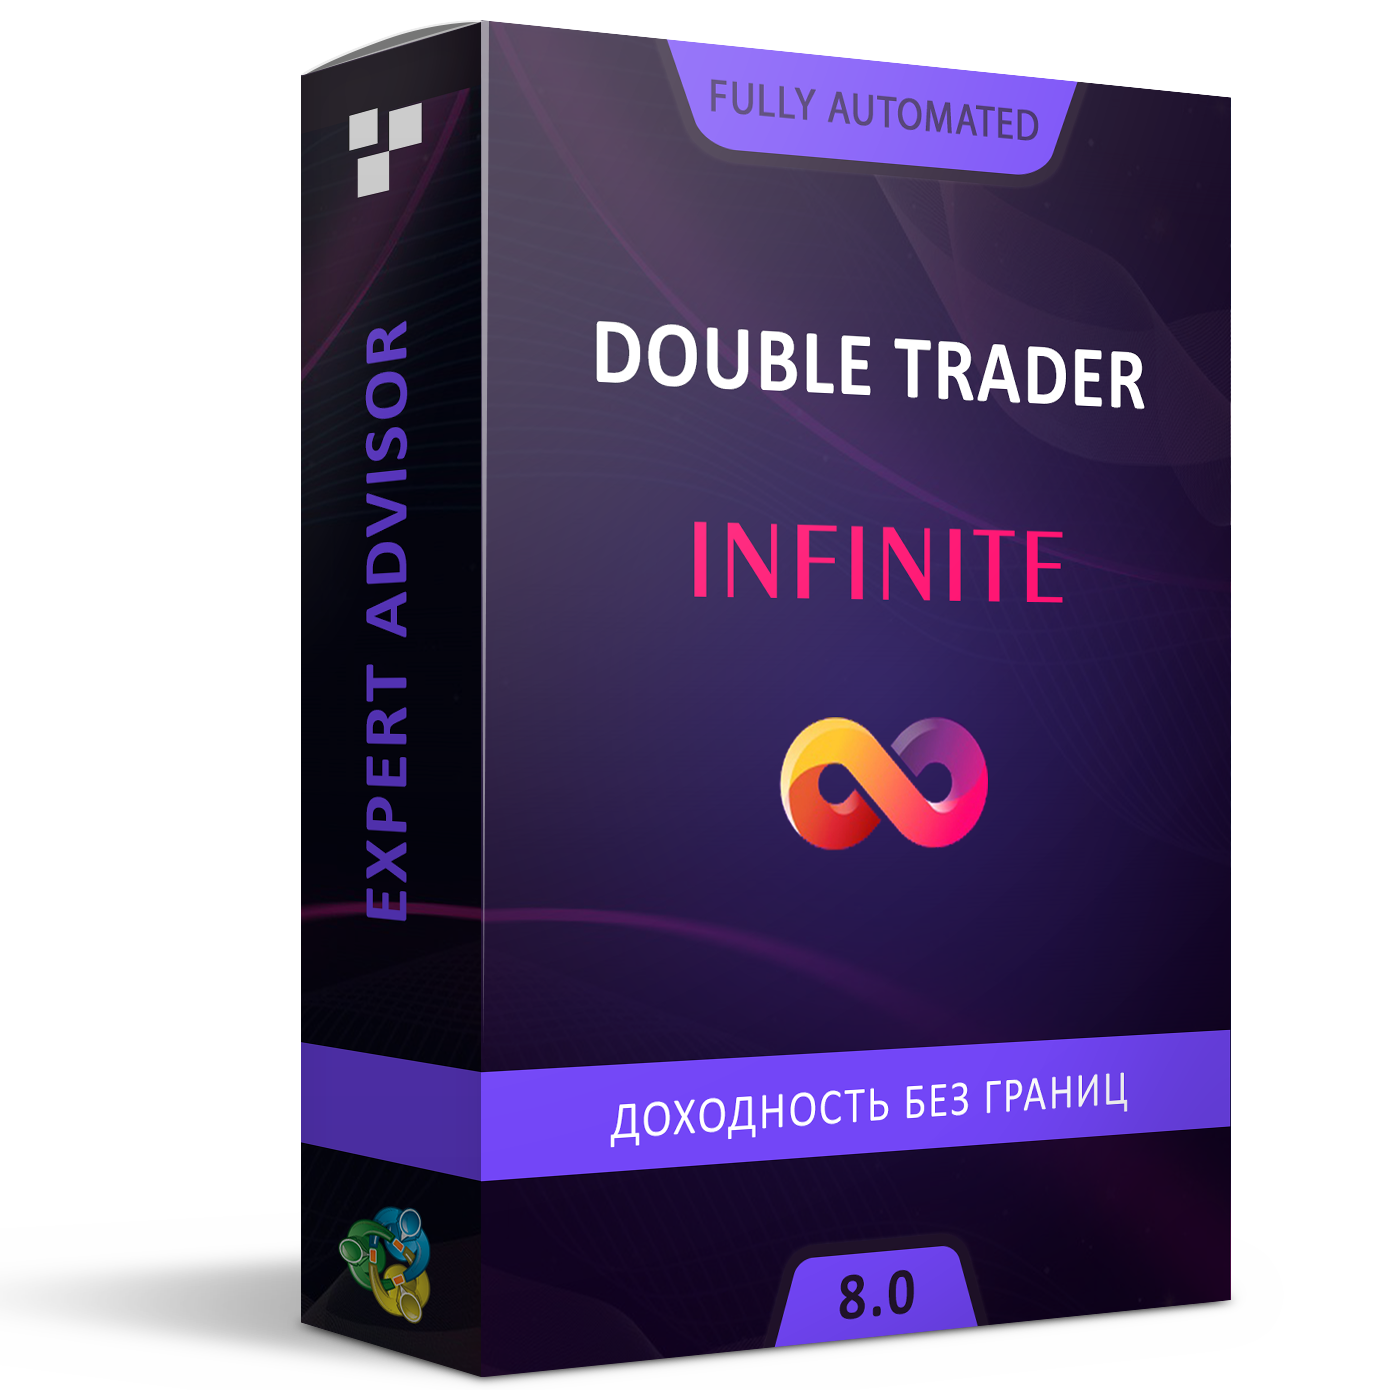 Double Trader 8 INFINITE